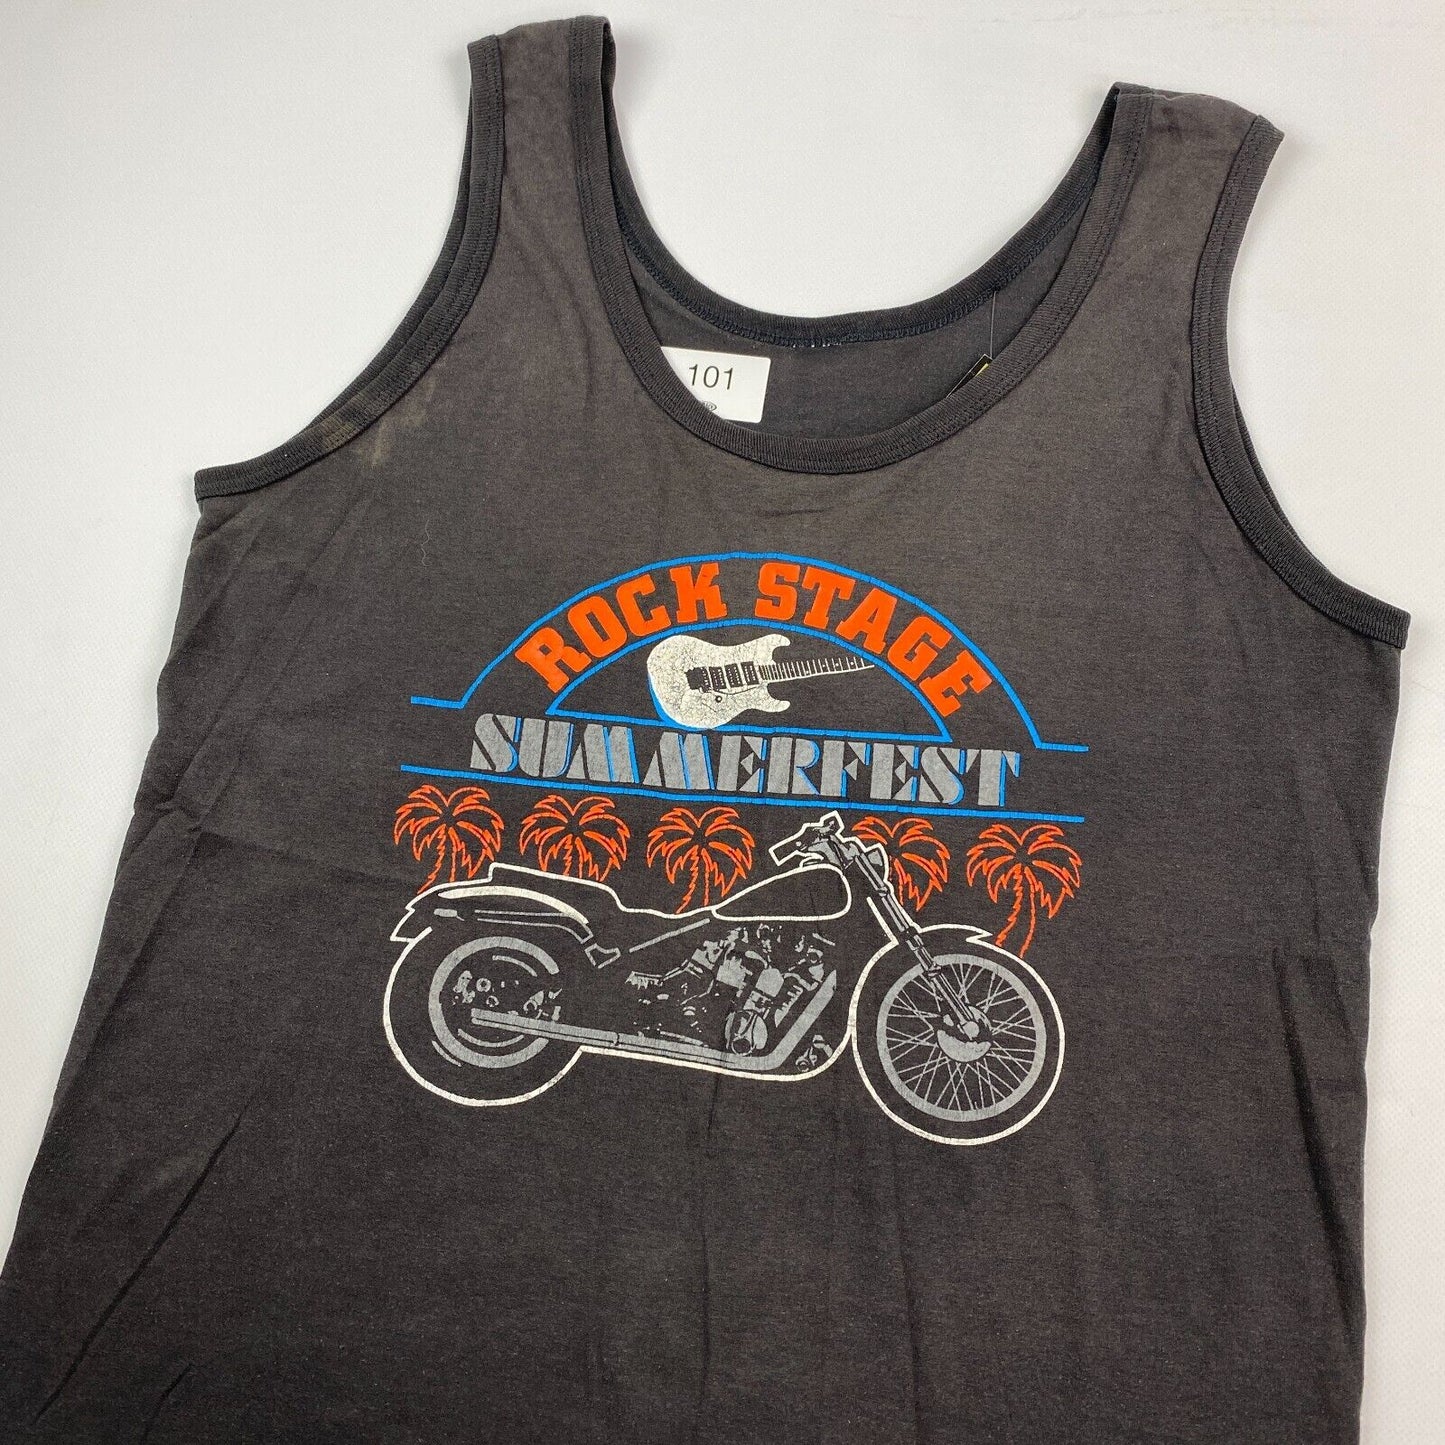 VINTAGE 90s Rock Stage Summerfest Biker Tank Sleeveless T-Shirt sz M Mens